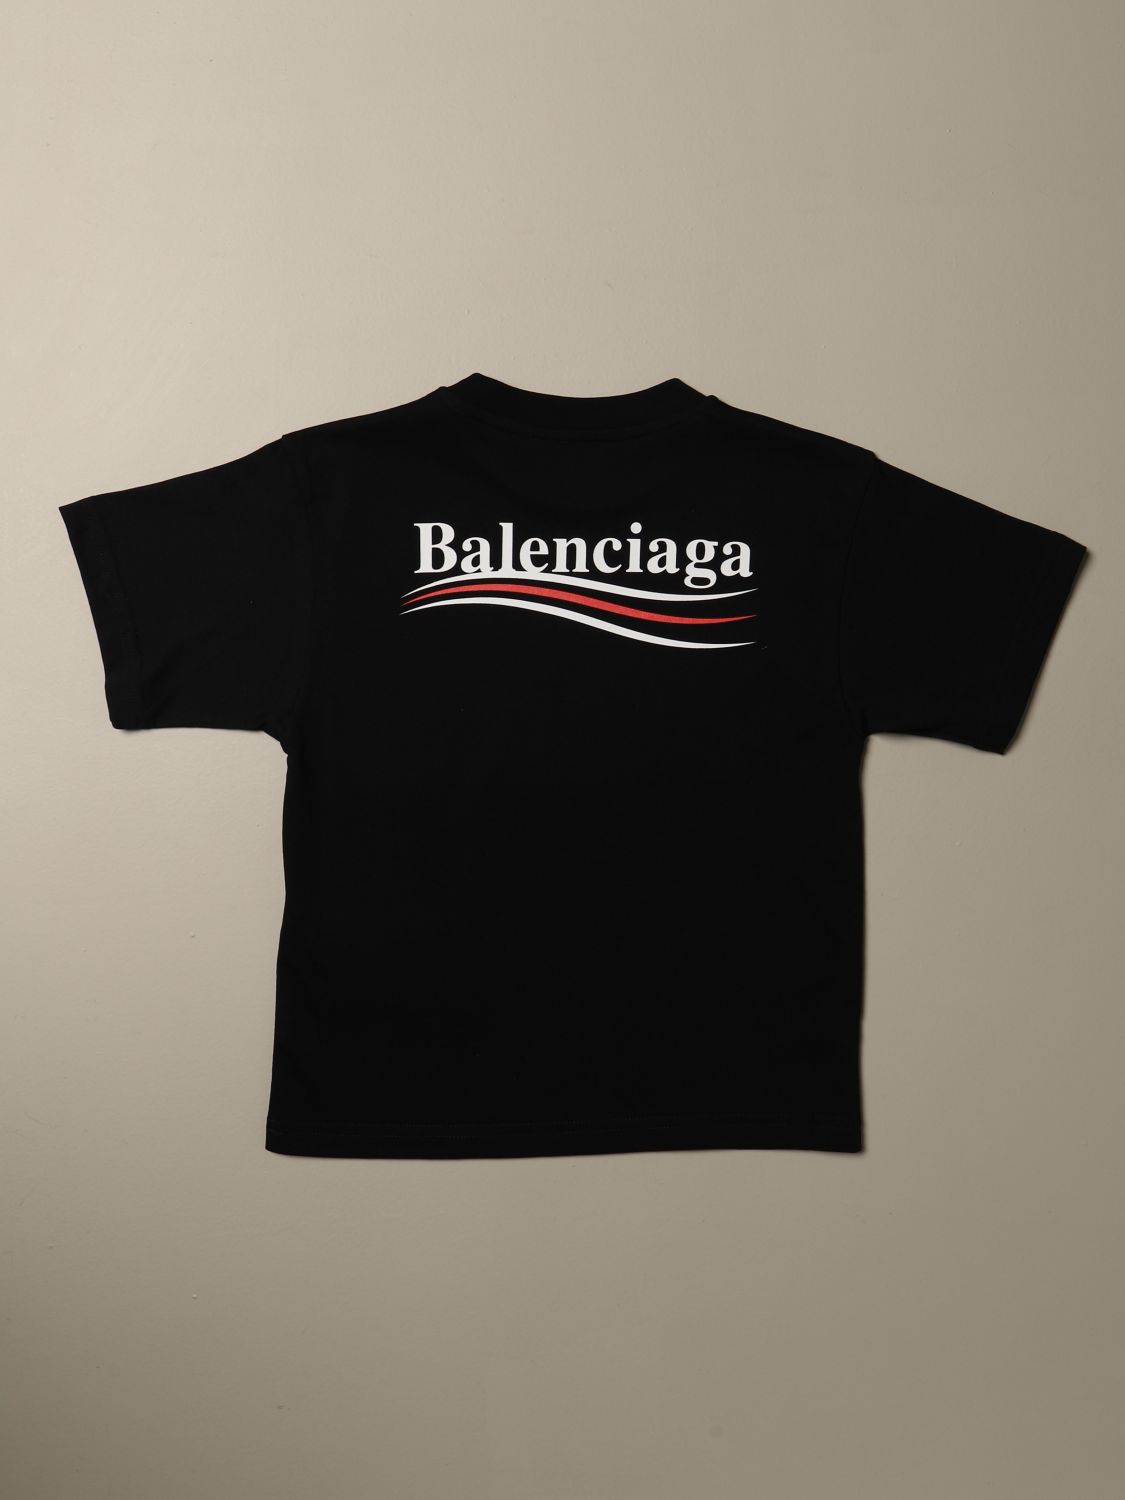 balenciaga all over logo t shirt Off 79% - www.gmcanantnag.net